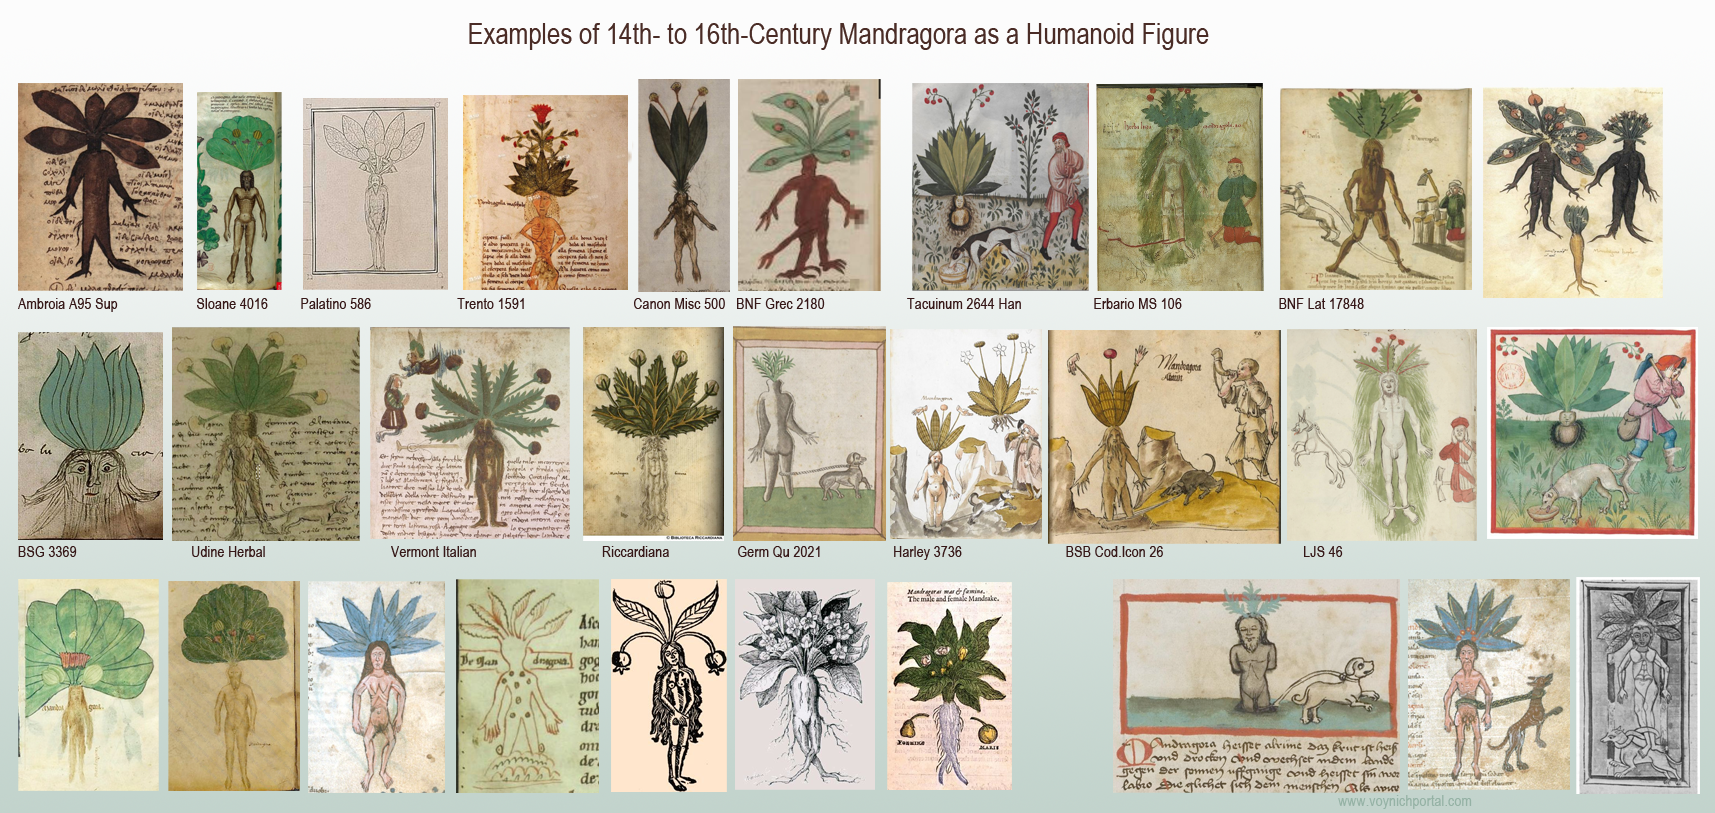 sample of medieval mandrake (Mandragora) drawings